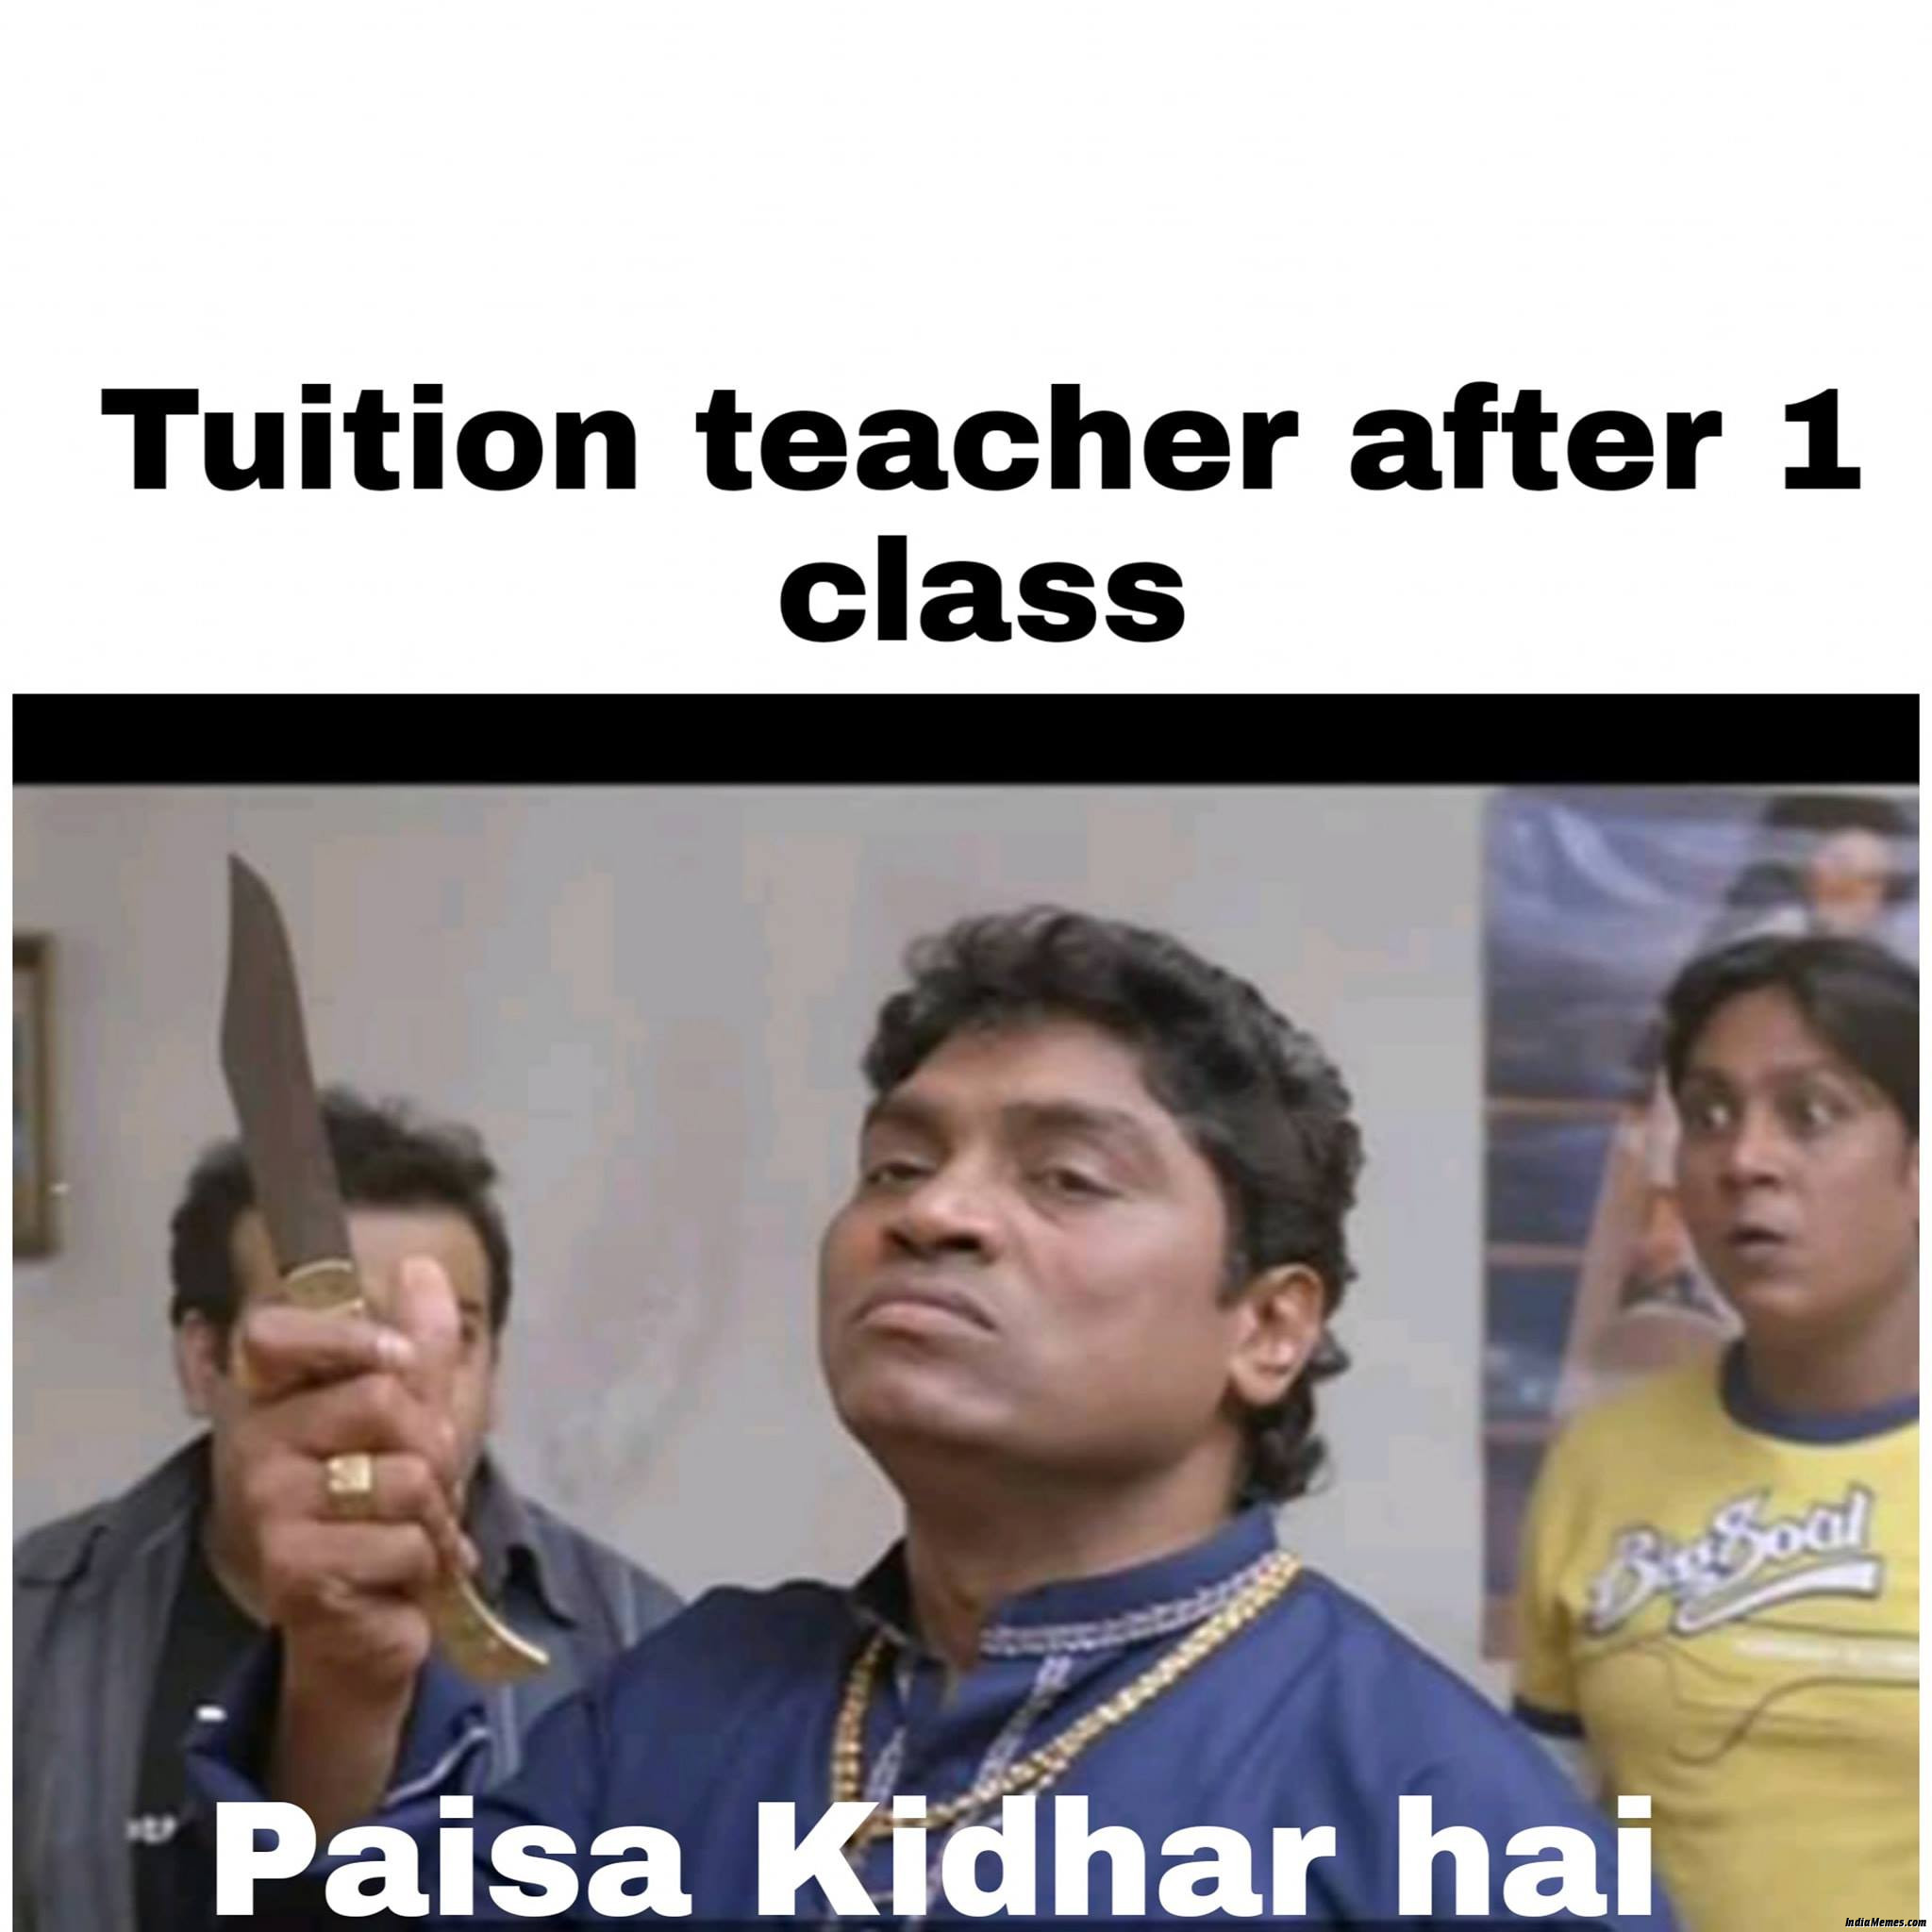 Tution teacher after 1 class Paisa kidhar hai meme